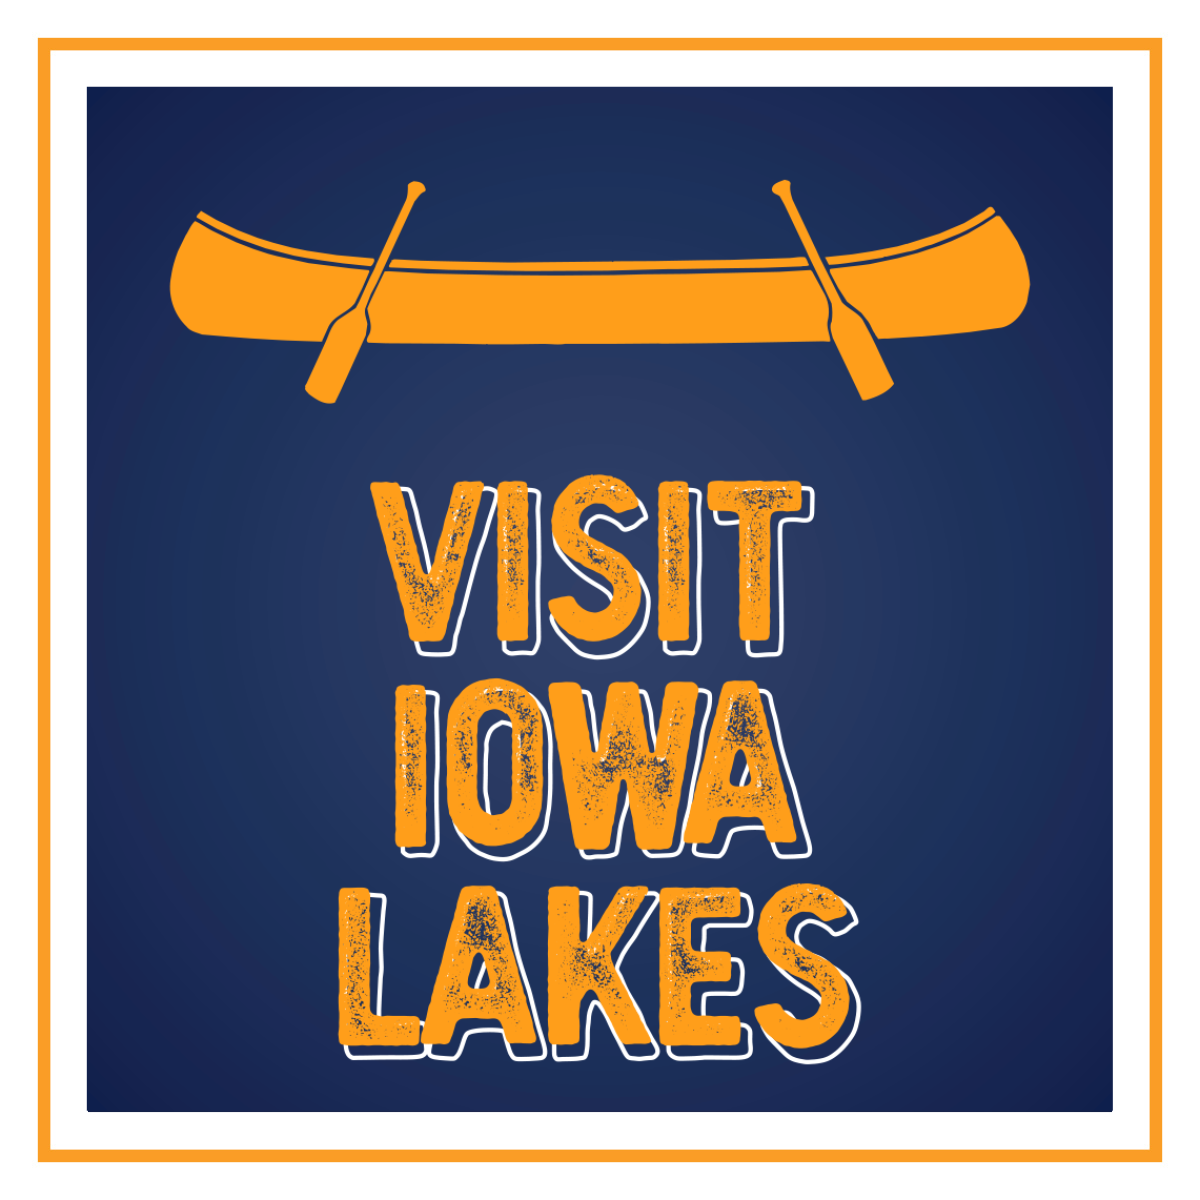 Visit Iowa Lakes